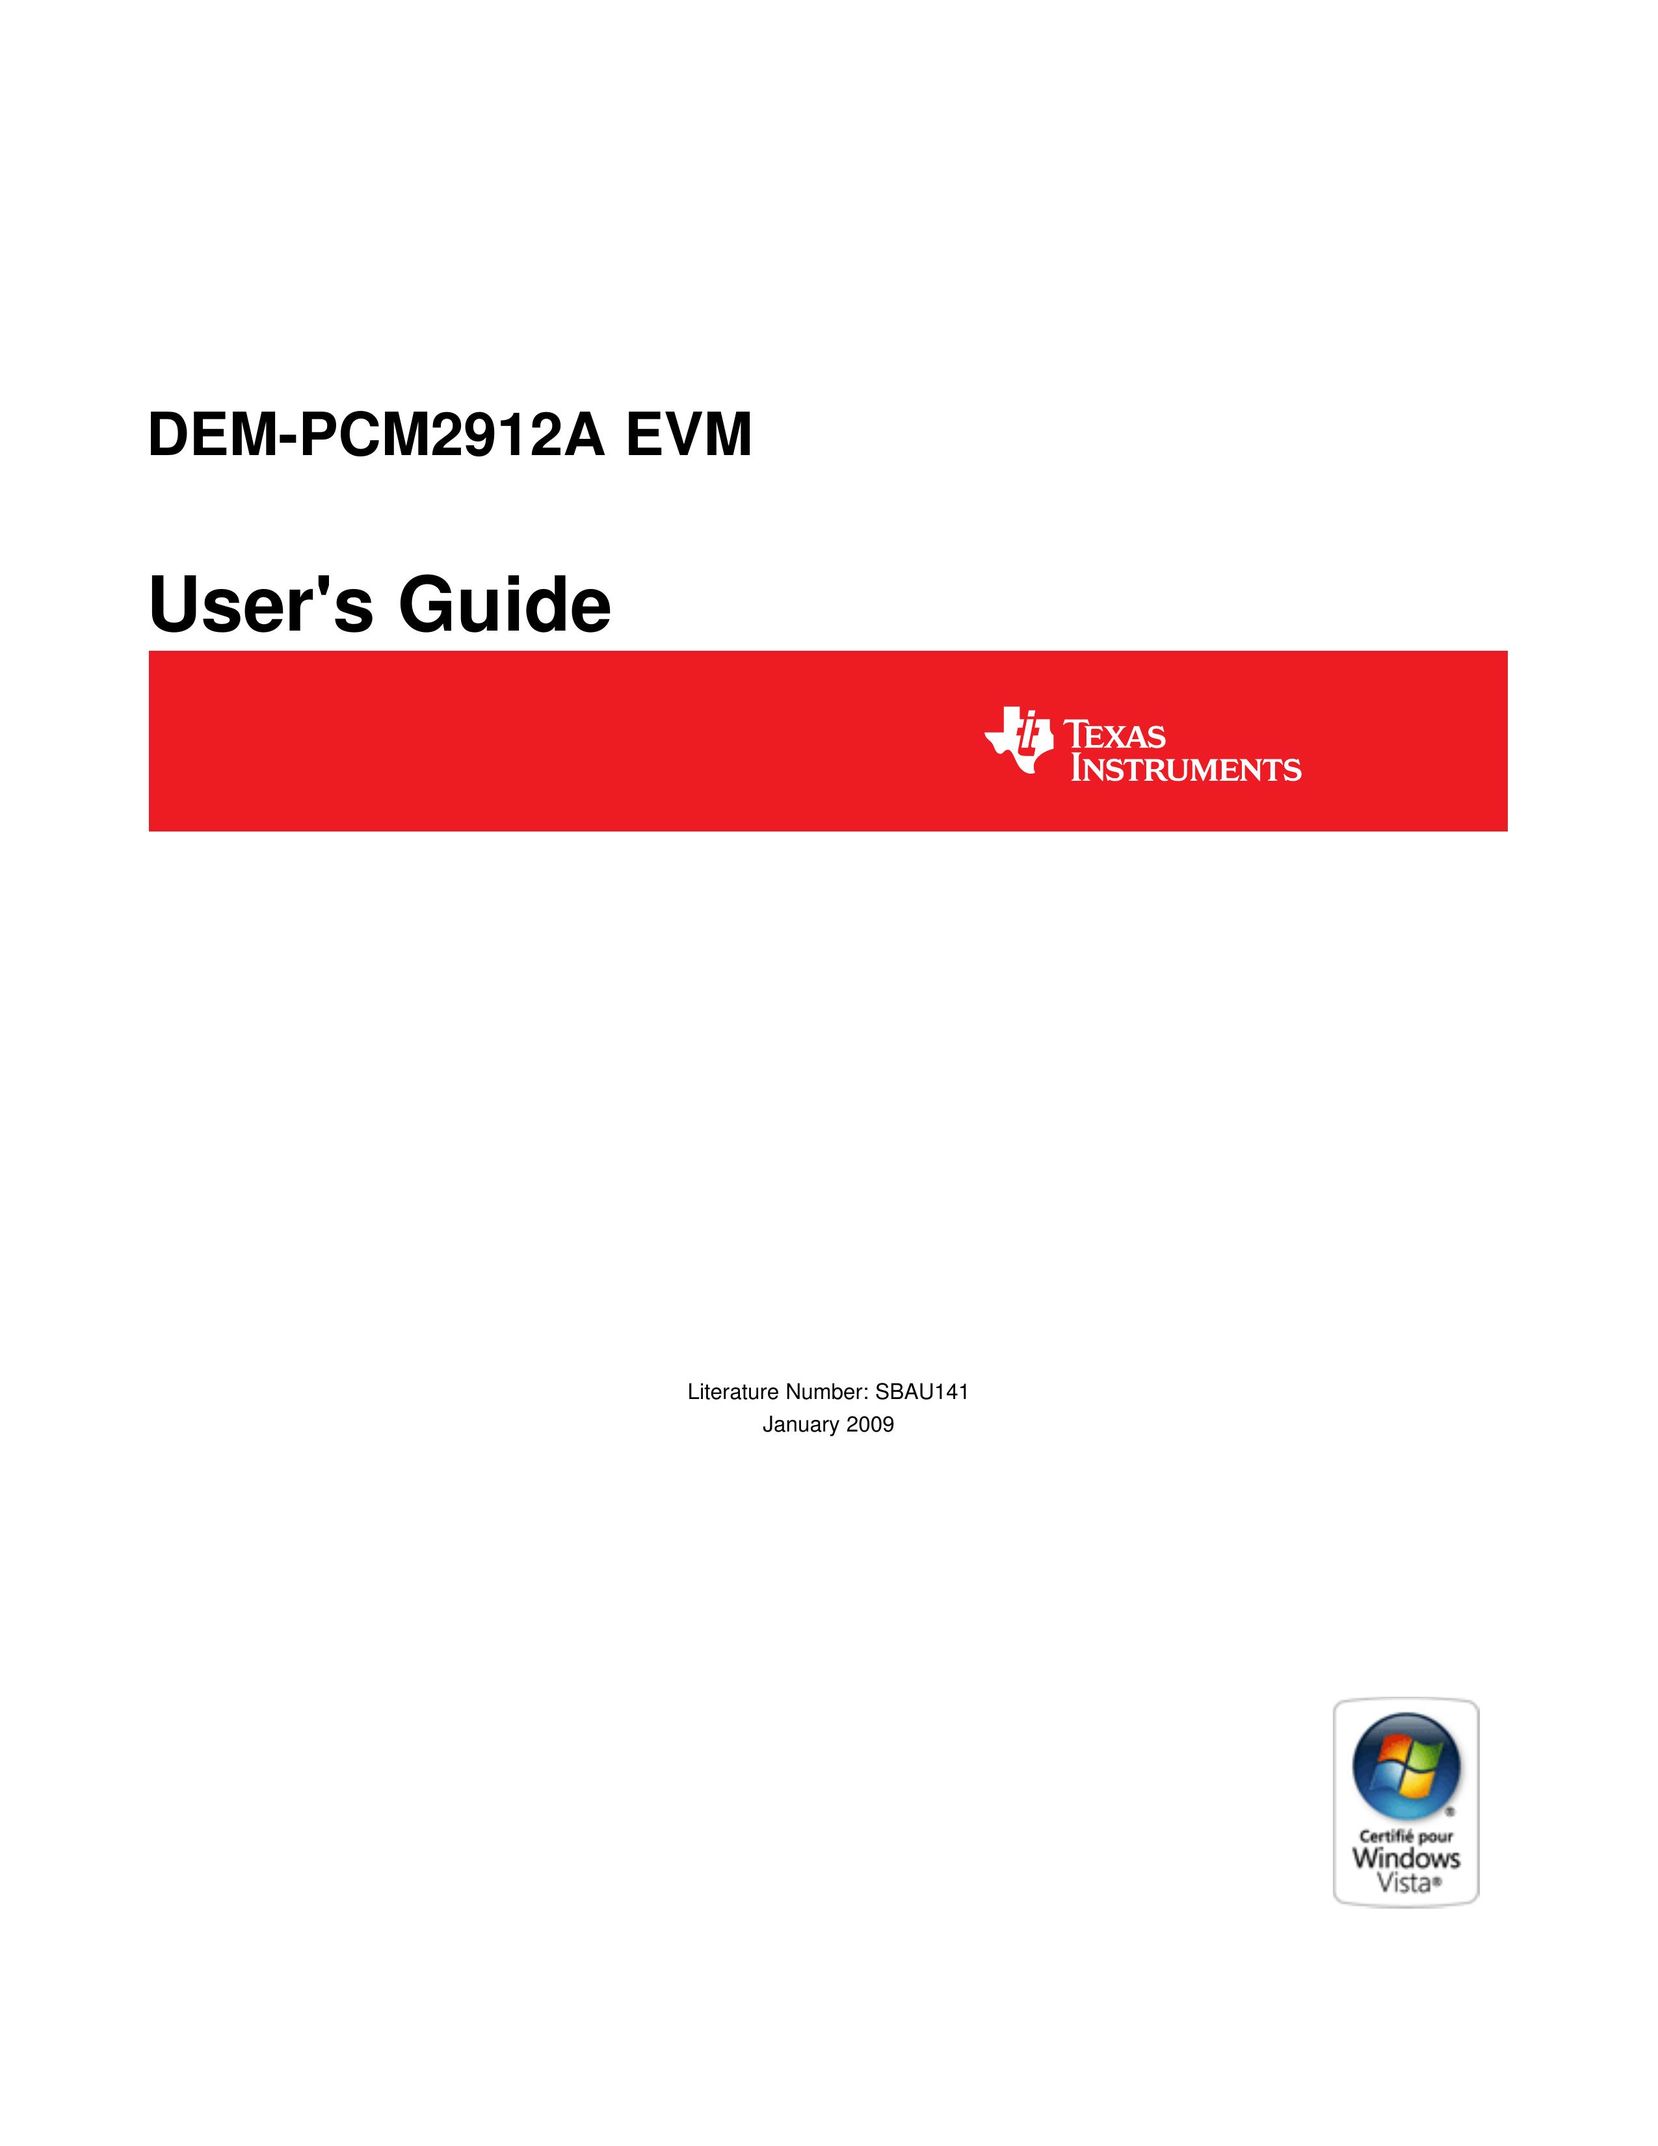 Texas Instruments DEM-PCM2912A EVM Network Card User Manual